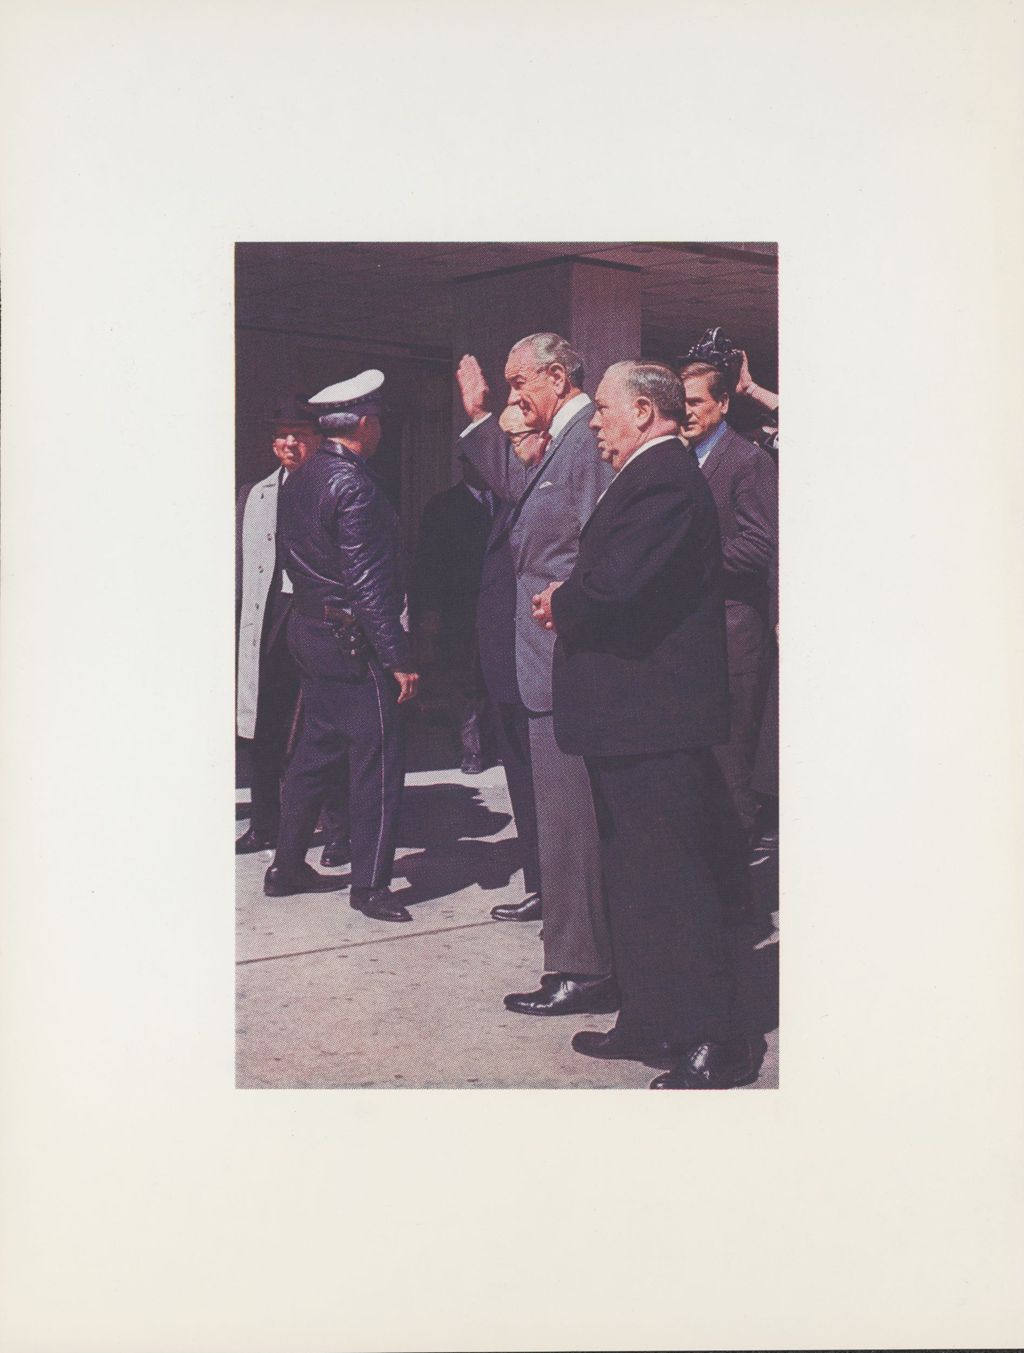 Miniature of Richard J. Daley standing outside with Lyndon B. Johnson